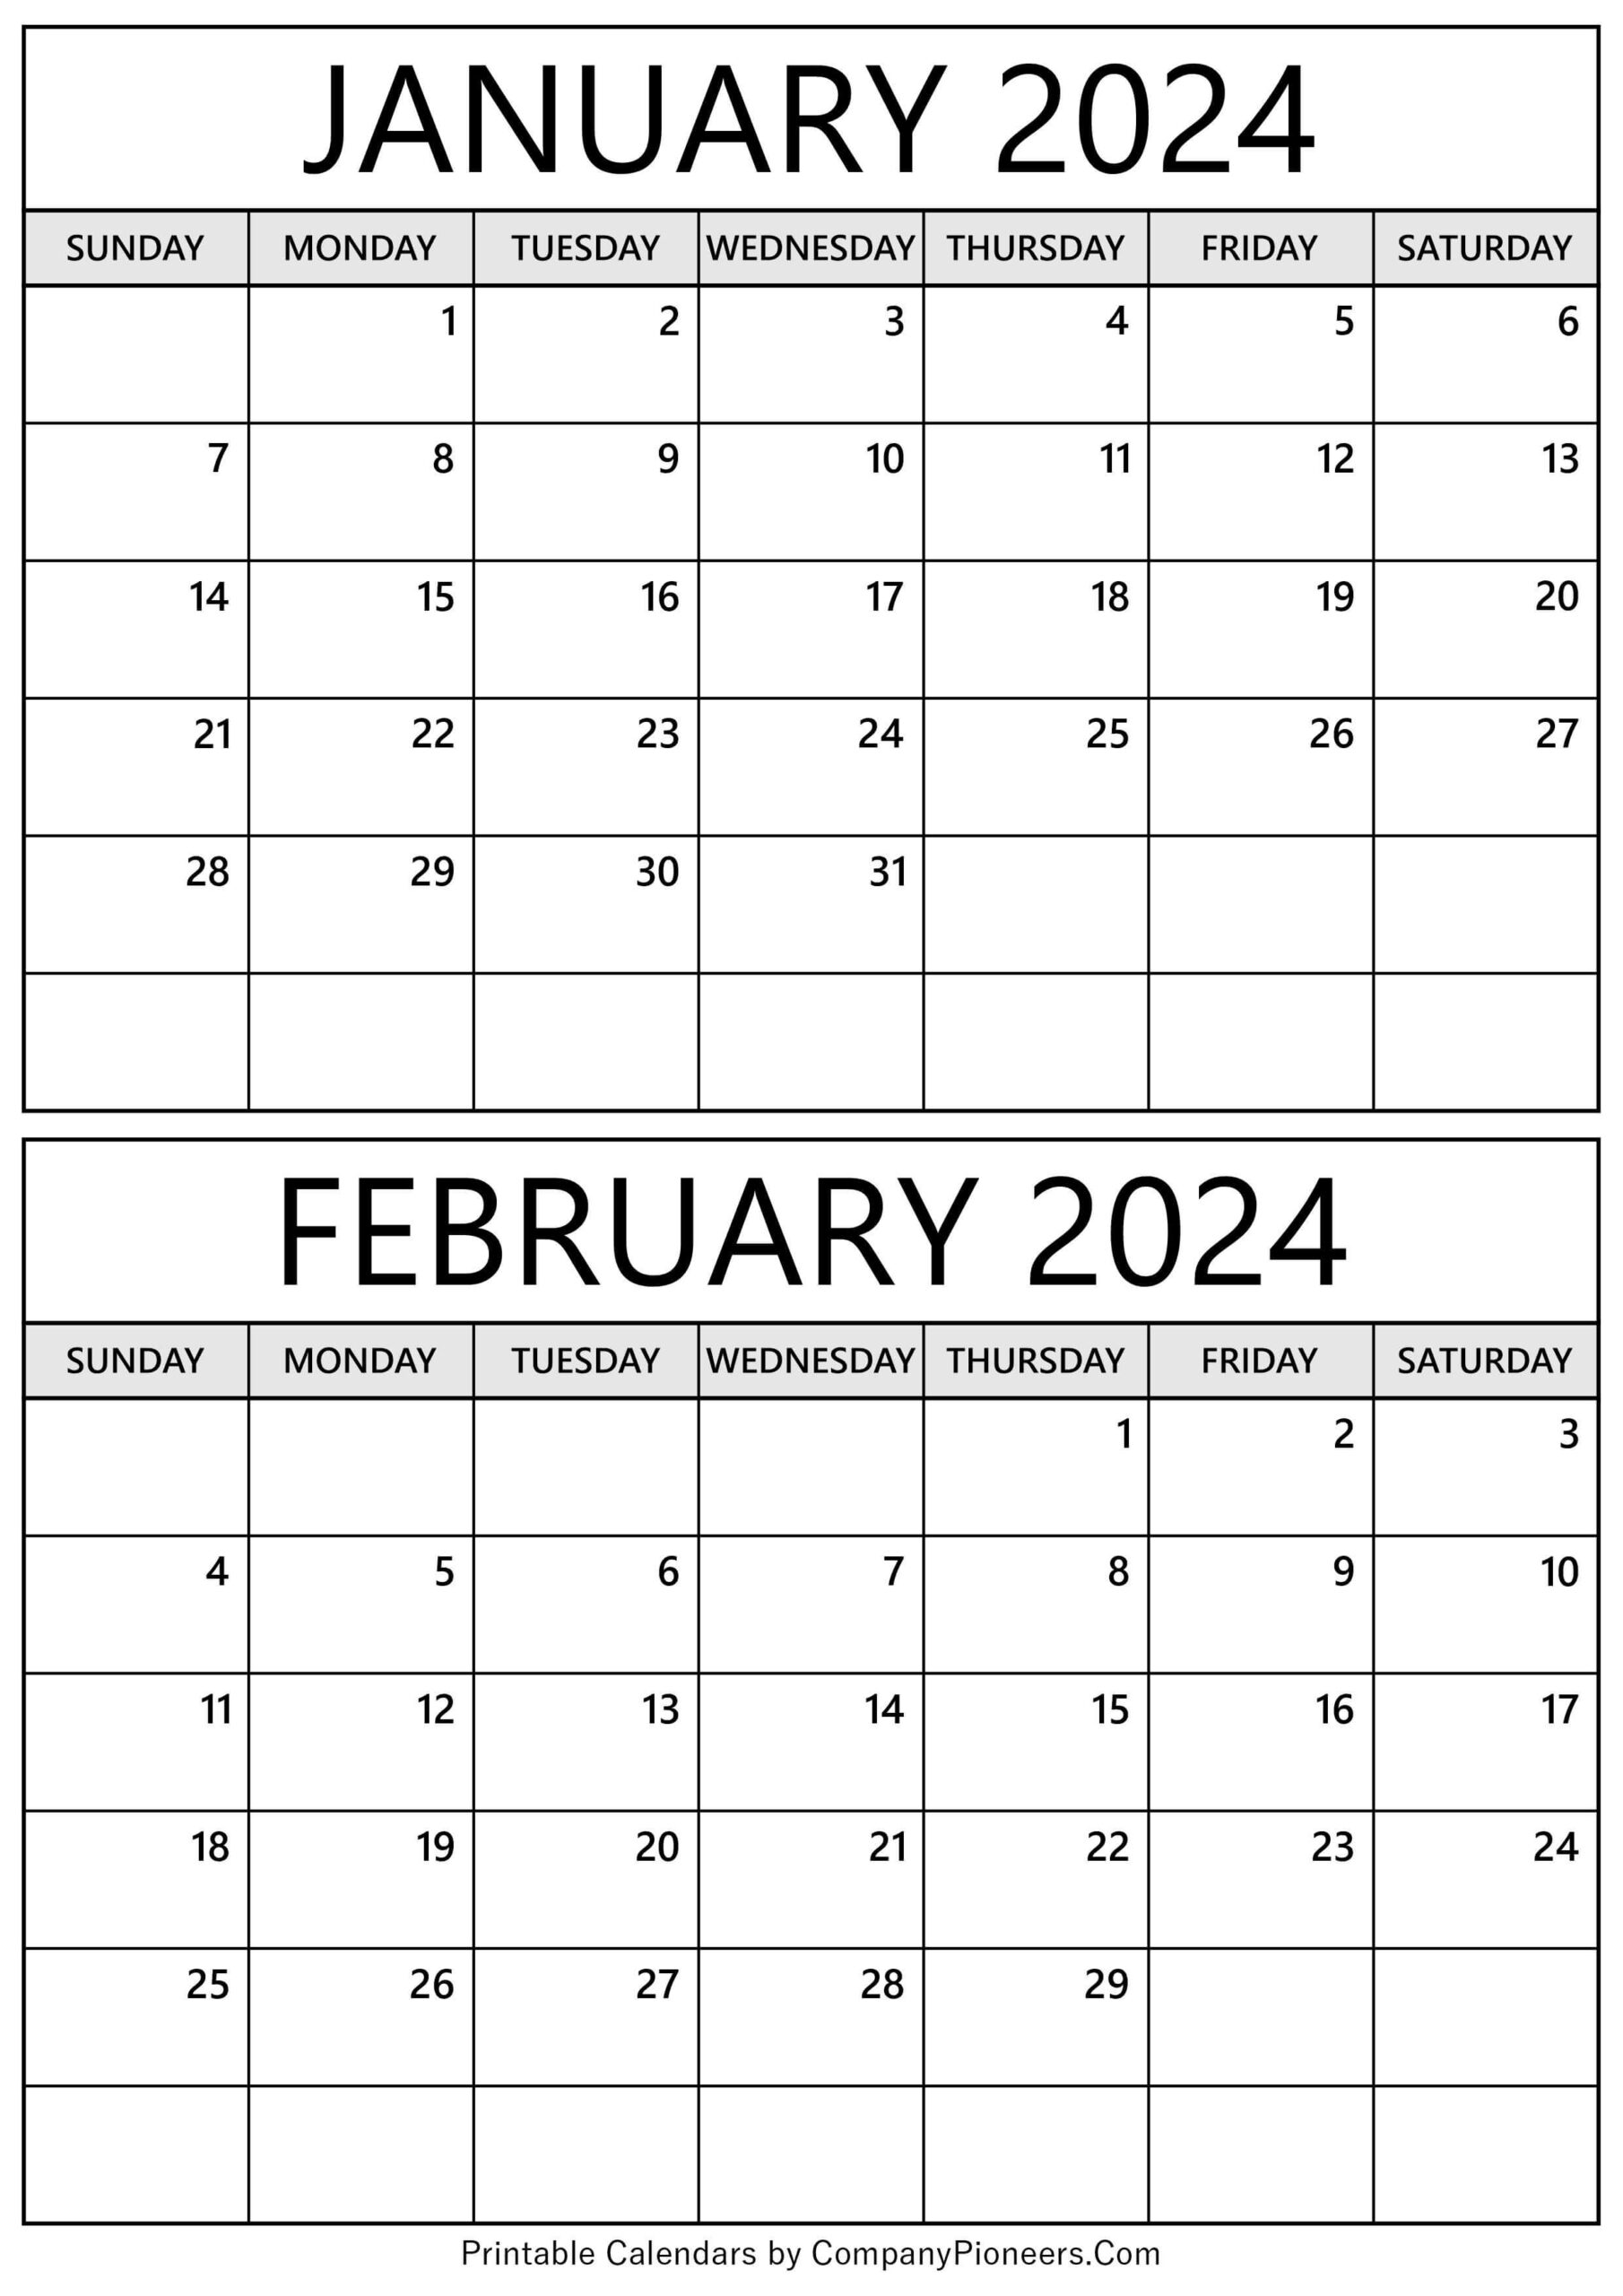 January February 2024 Calendar Printable - Template for Printable Calendar 2024 January February